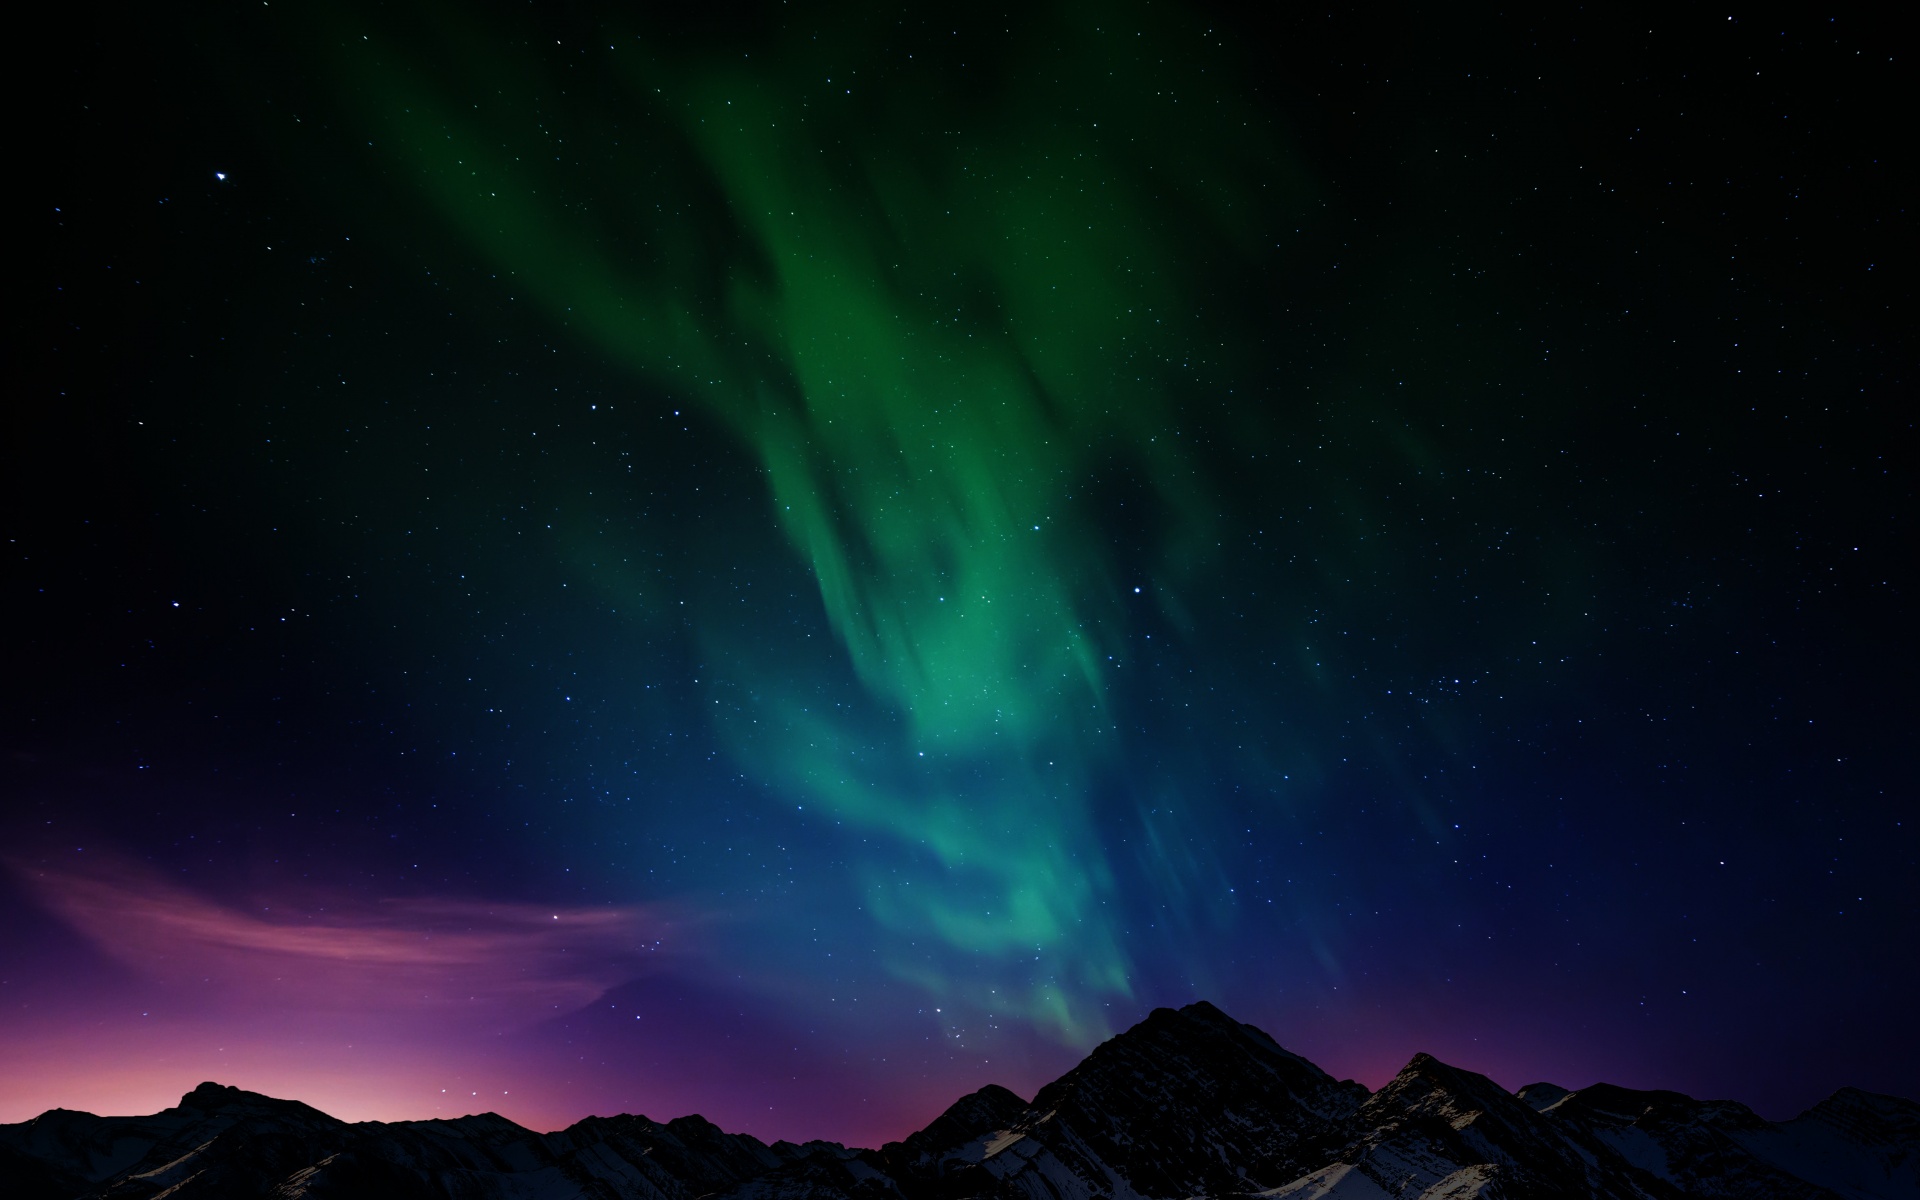 Aurora Borealis Wallpaper 4k Scenic Northern Lights